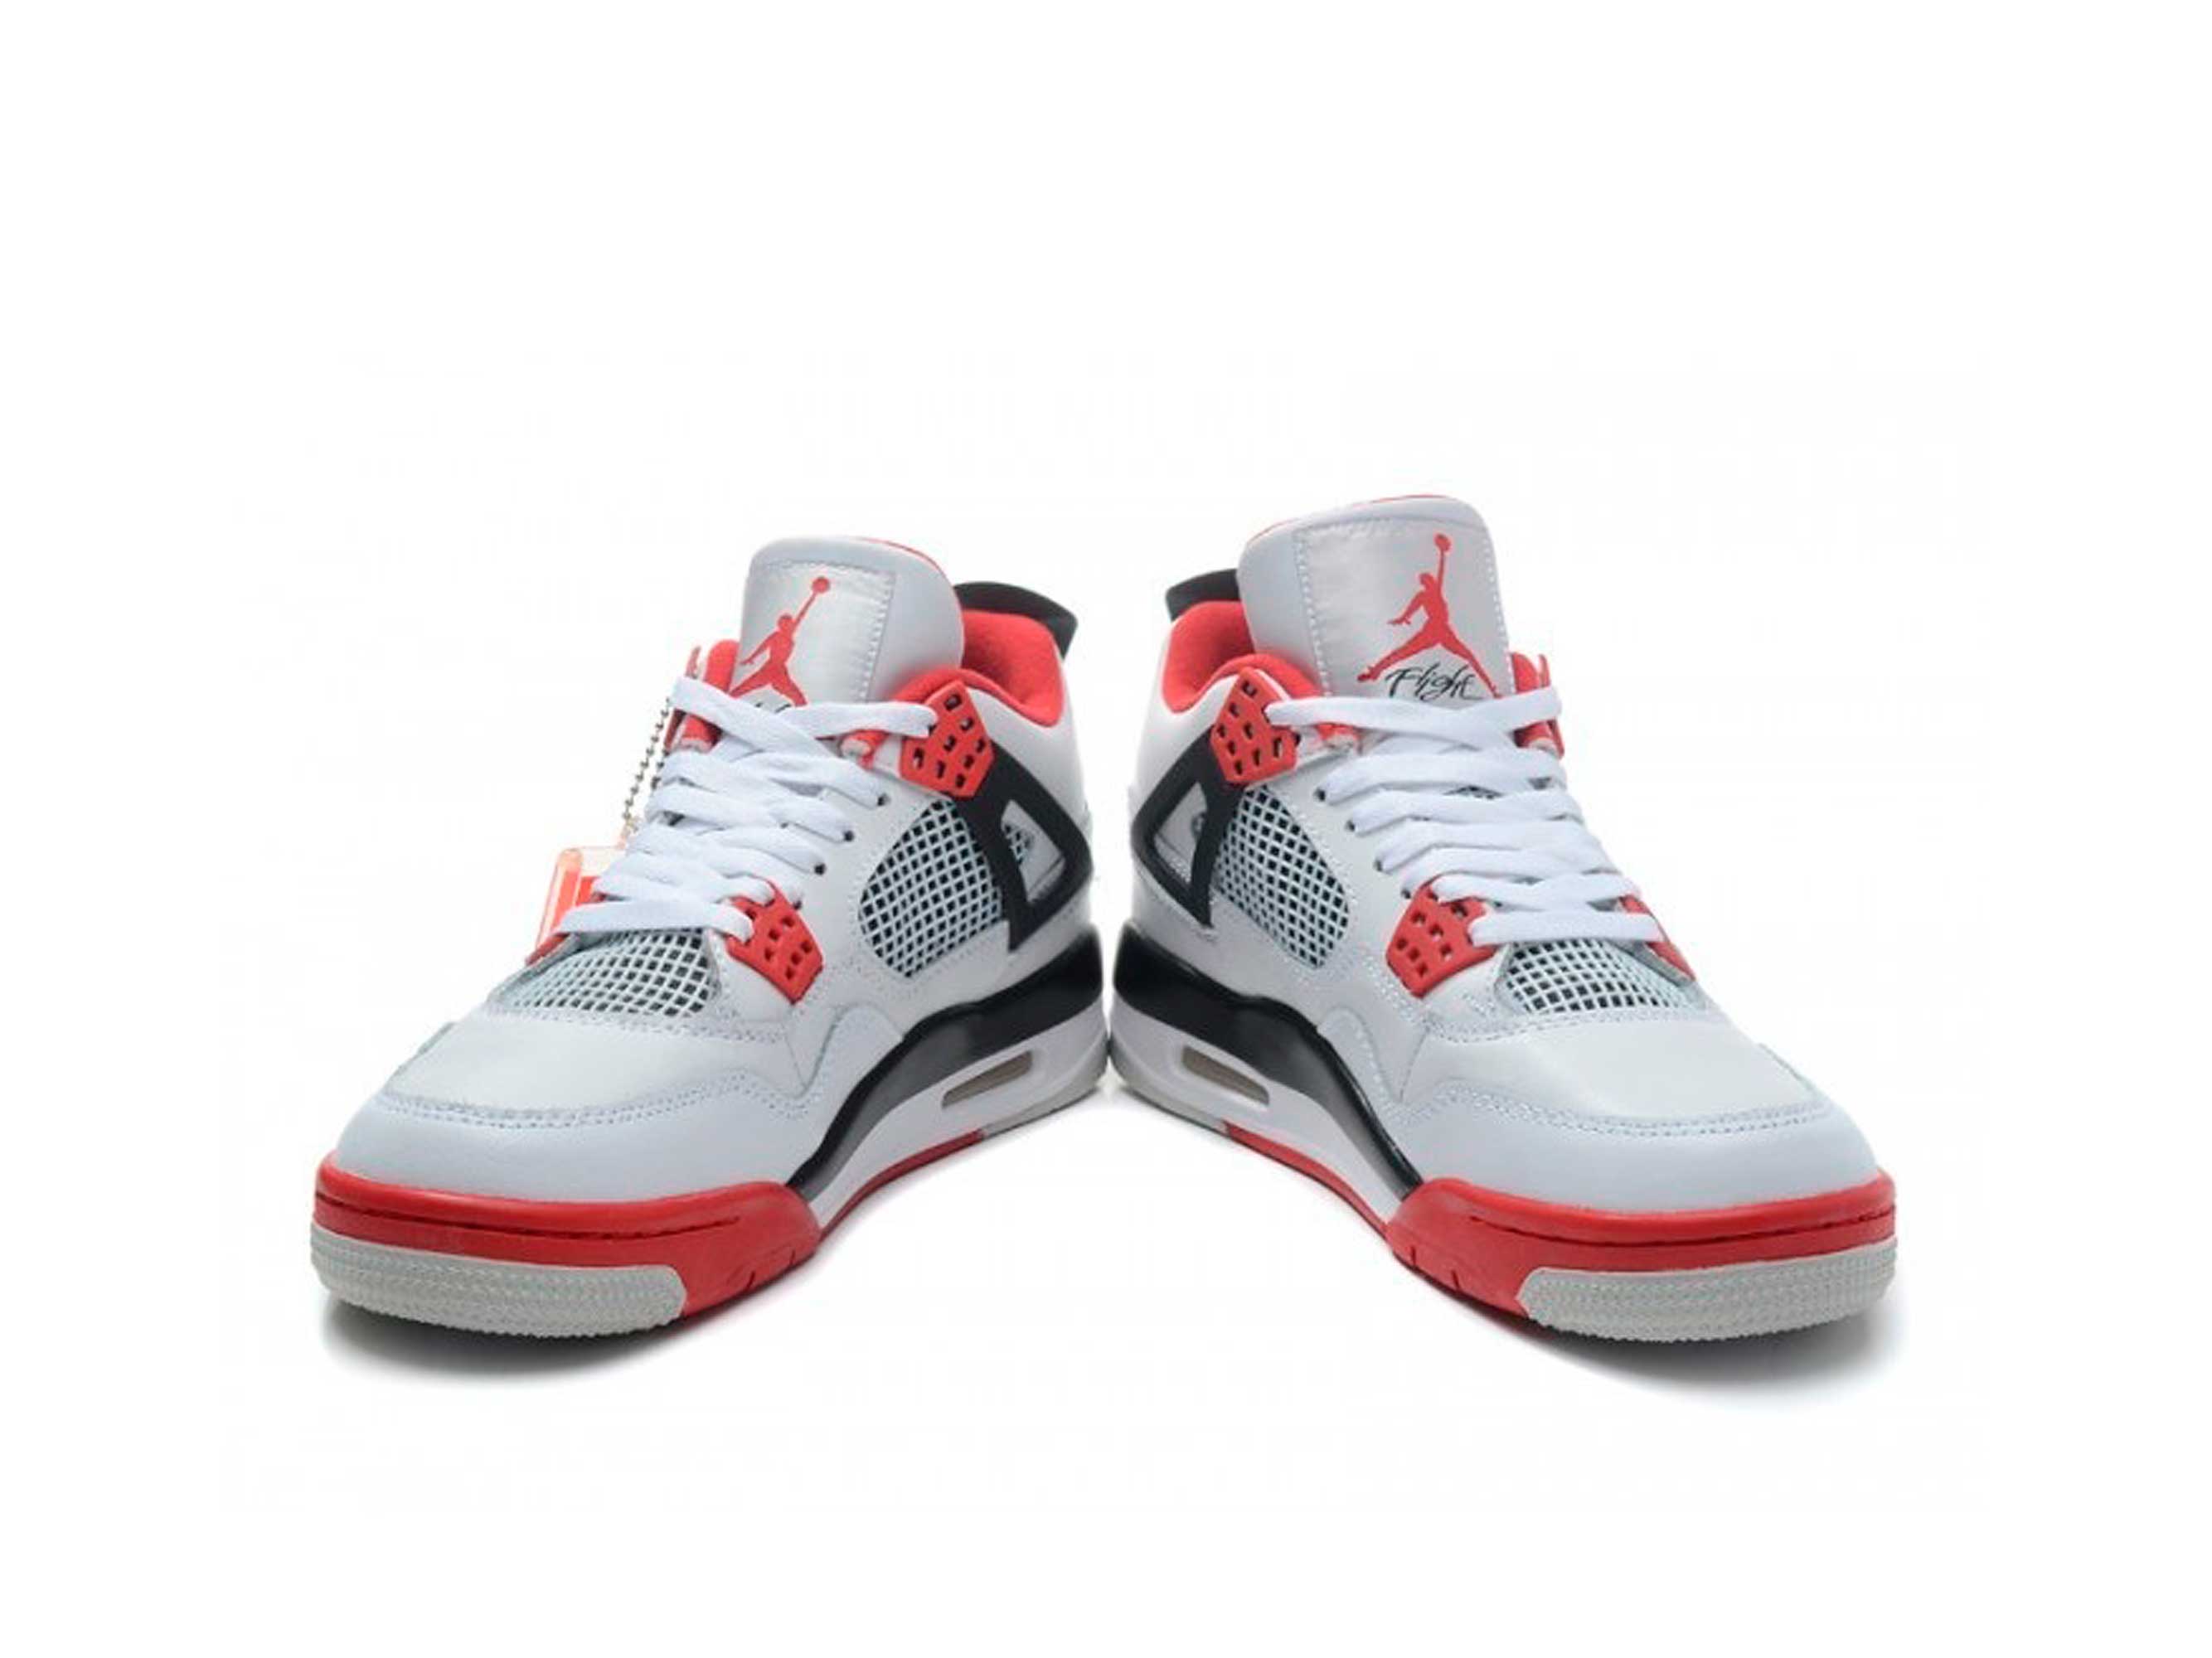 Купить кроссовки nike jordan 4. Nike Air Jordan 4 White Red. Nike Air Jordan 4 Retro Fire Red. Nike Air Jordan 4 Retro White Red. Nike Air Jordan 4 Fire Red.